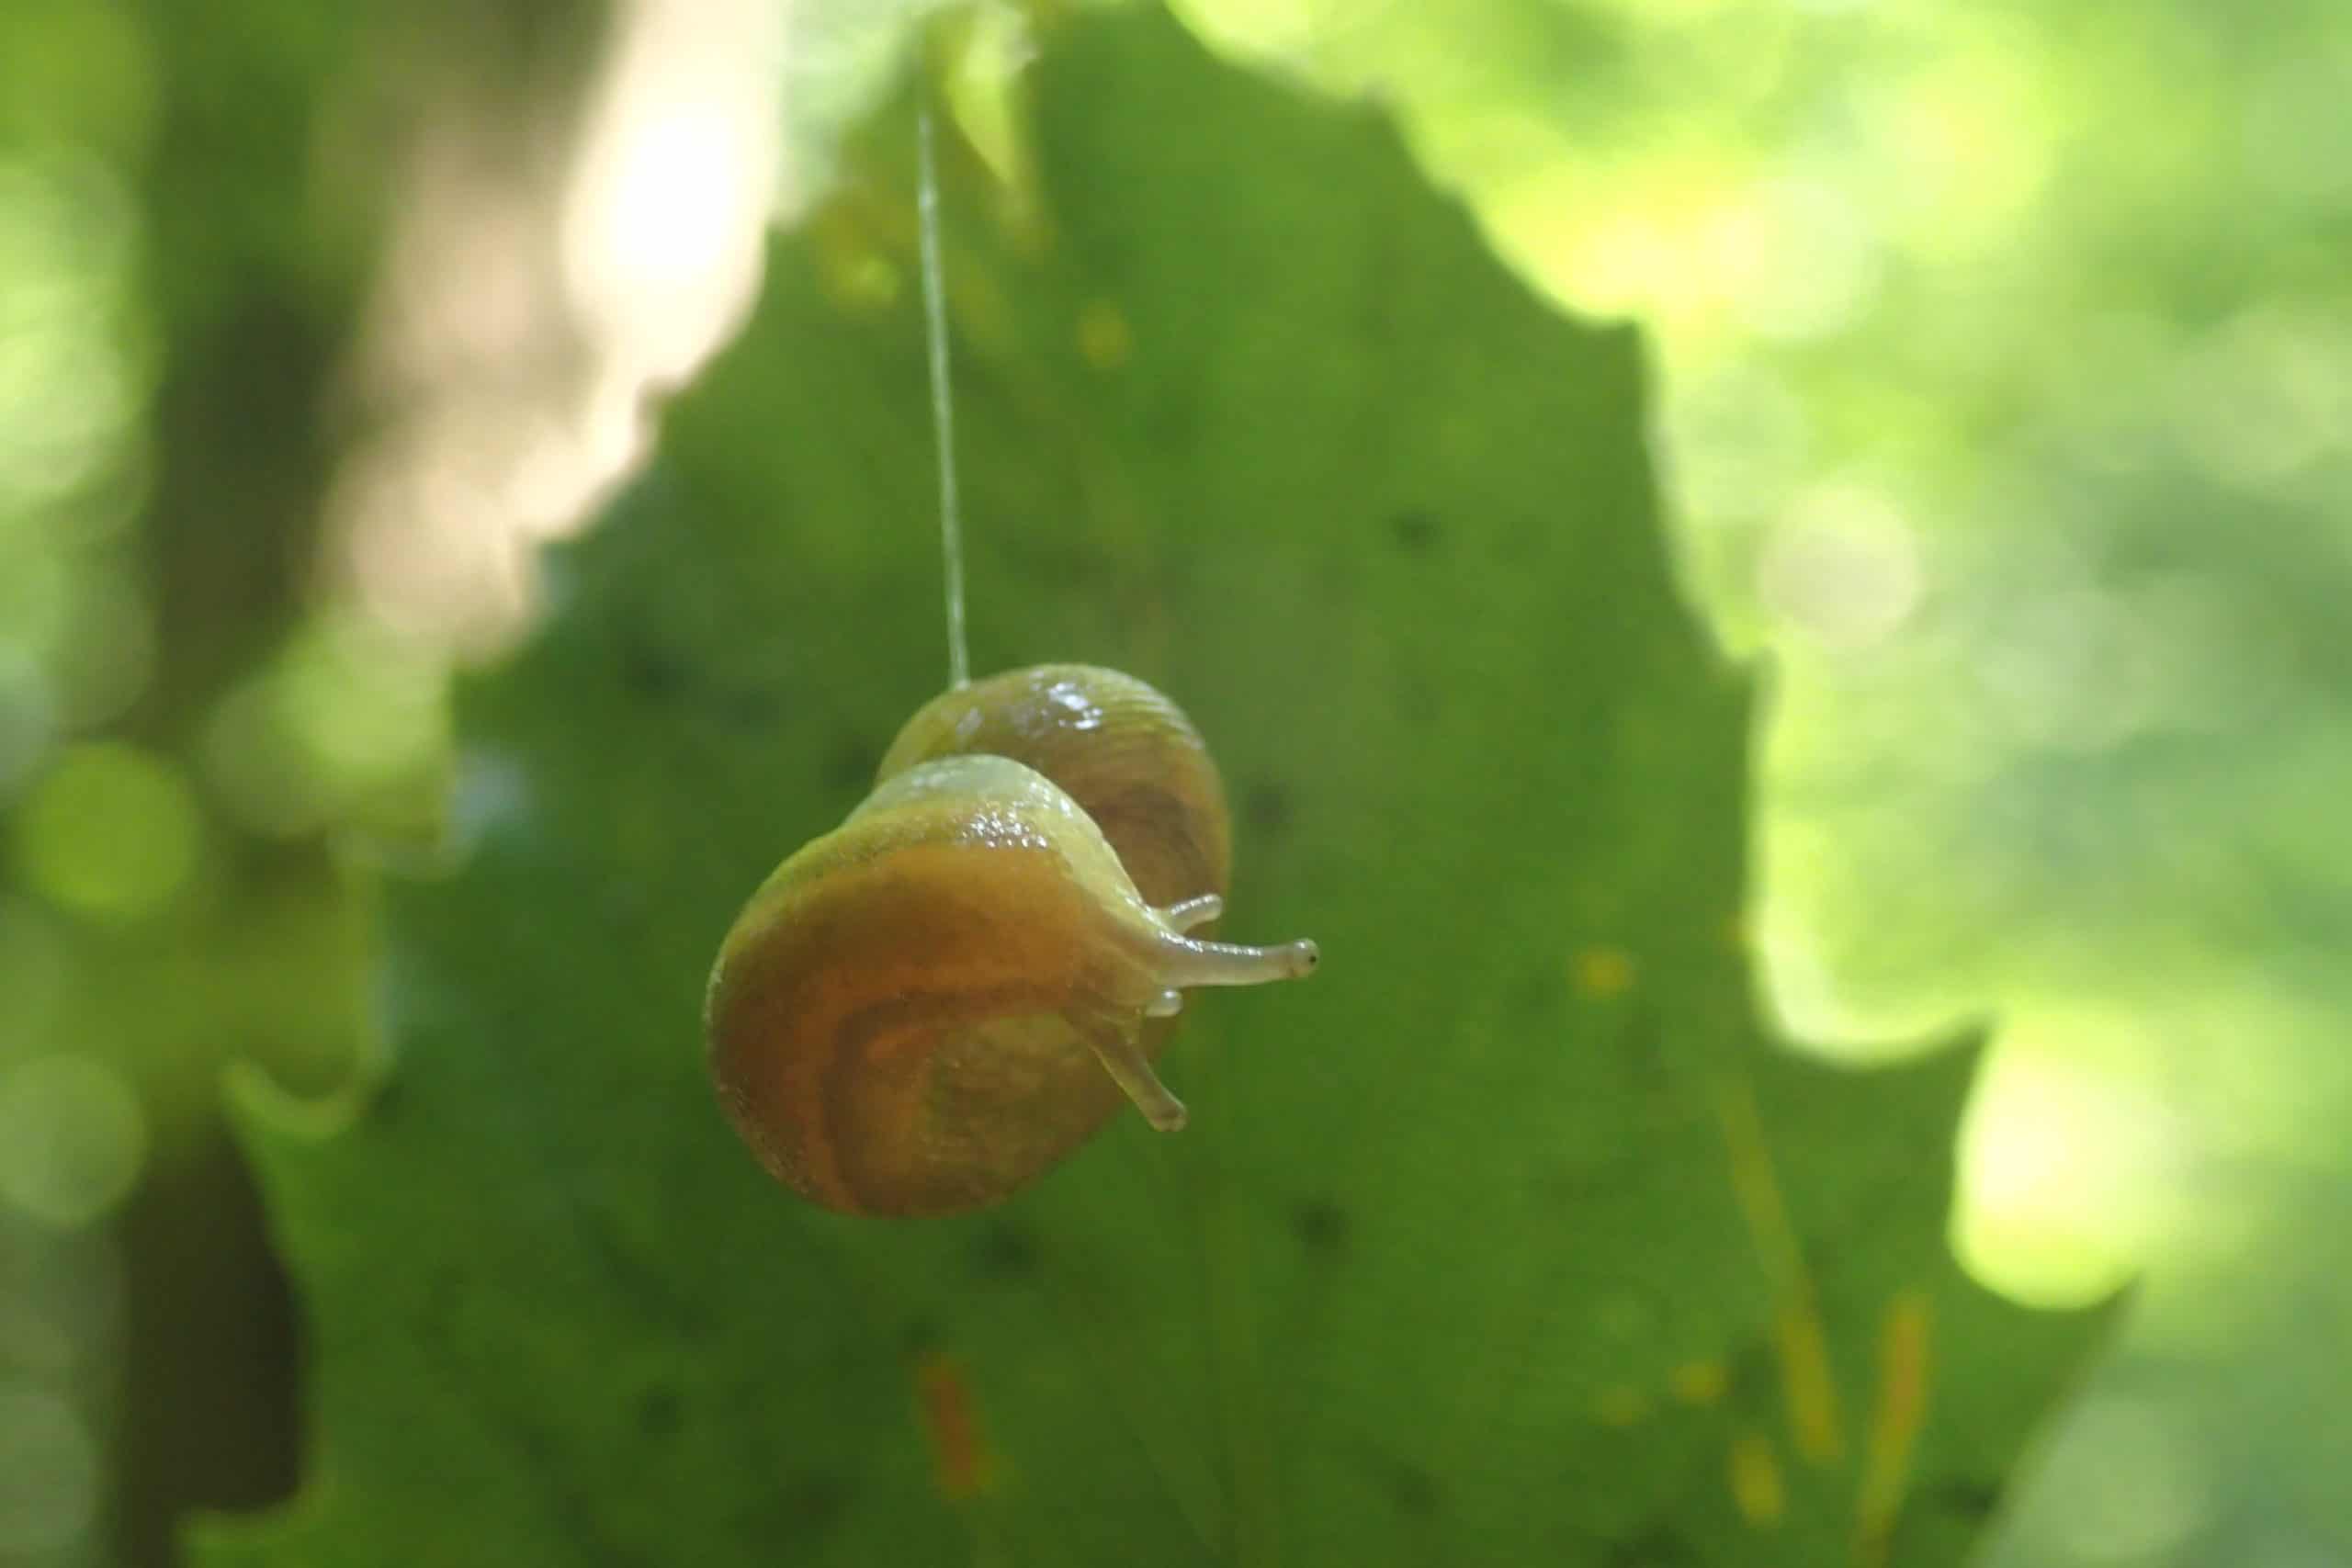 Slug hanging from filament